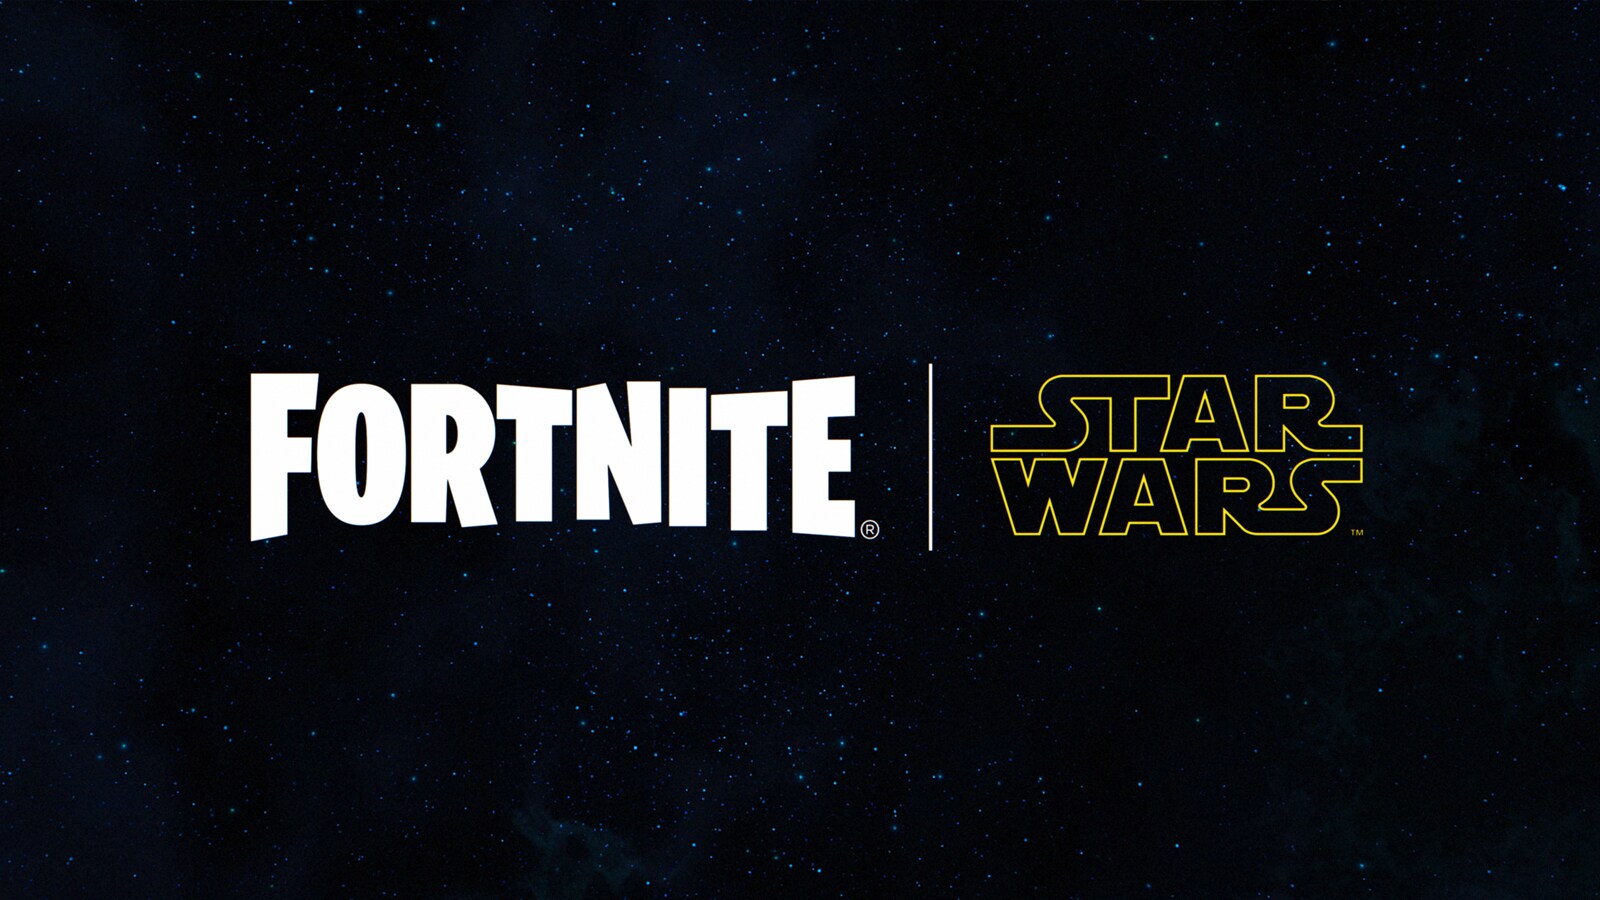 New Fortnite | Star Wars Collab Coming May 3